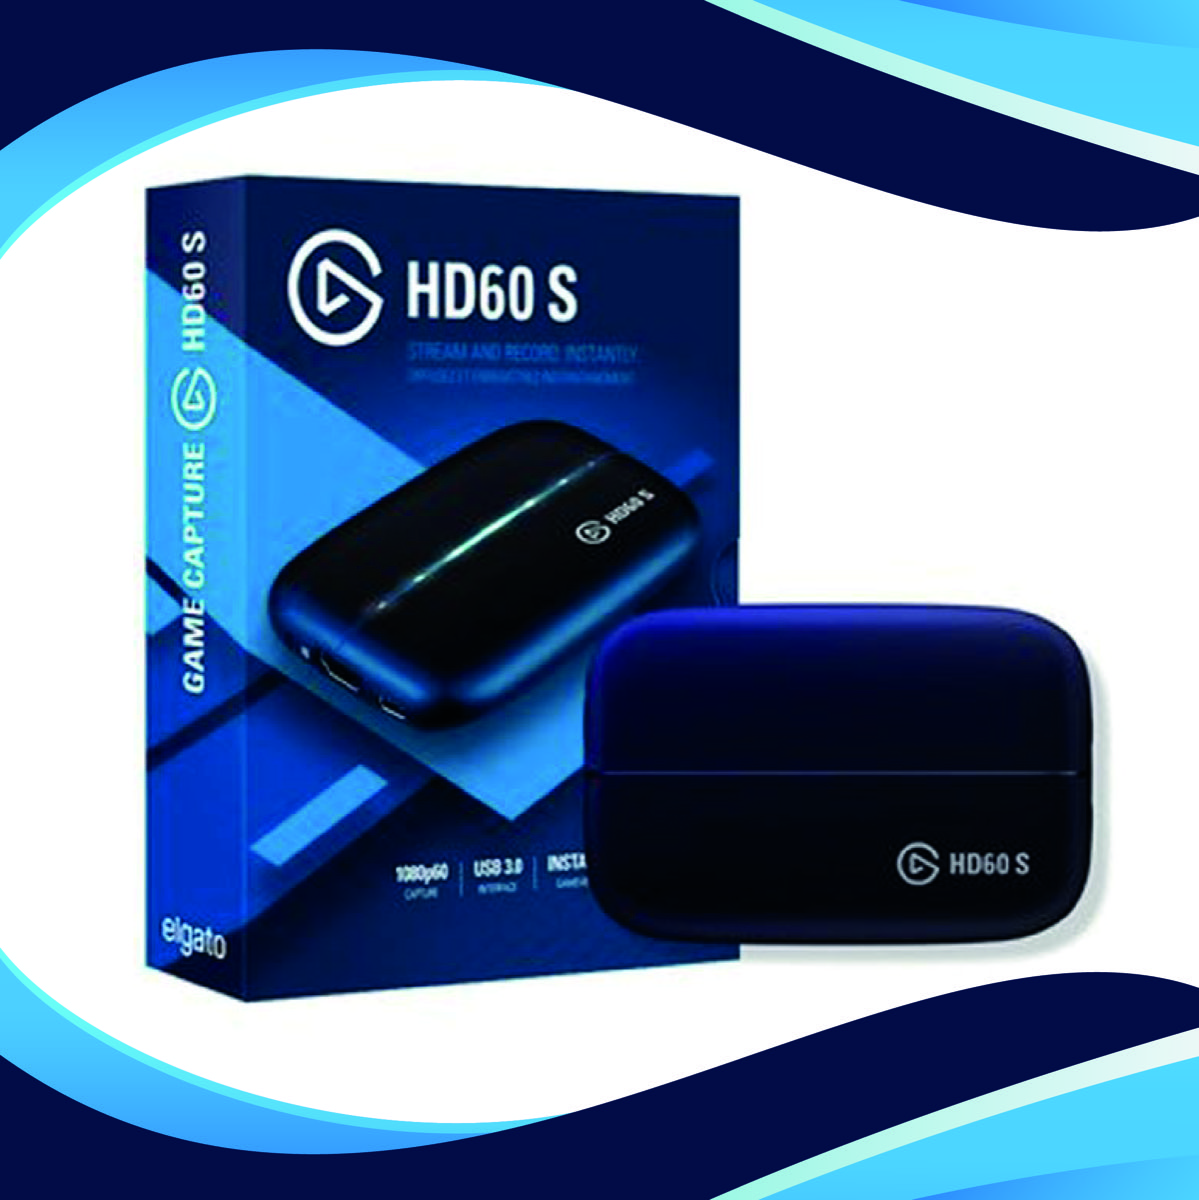 Capturadora ELGATO HD60 S USB PS4 XBOX PC